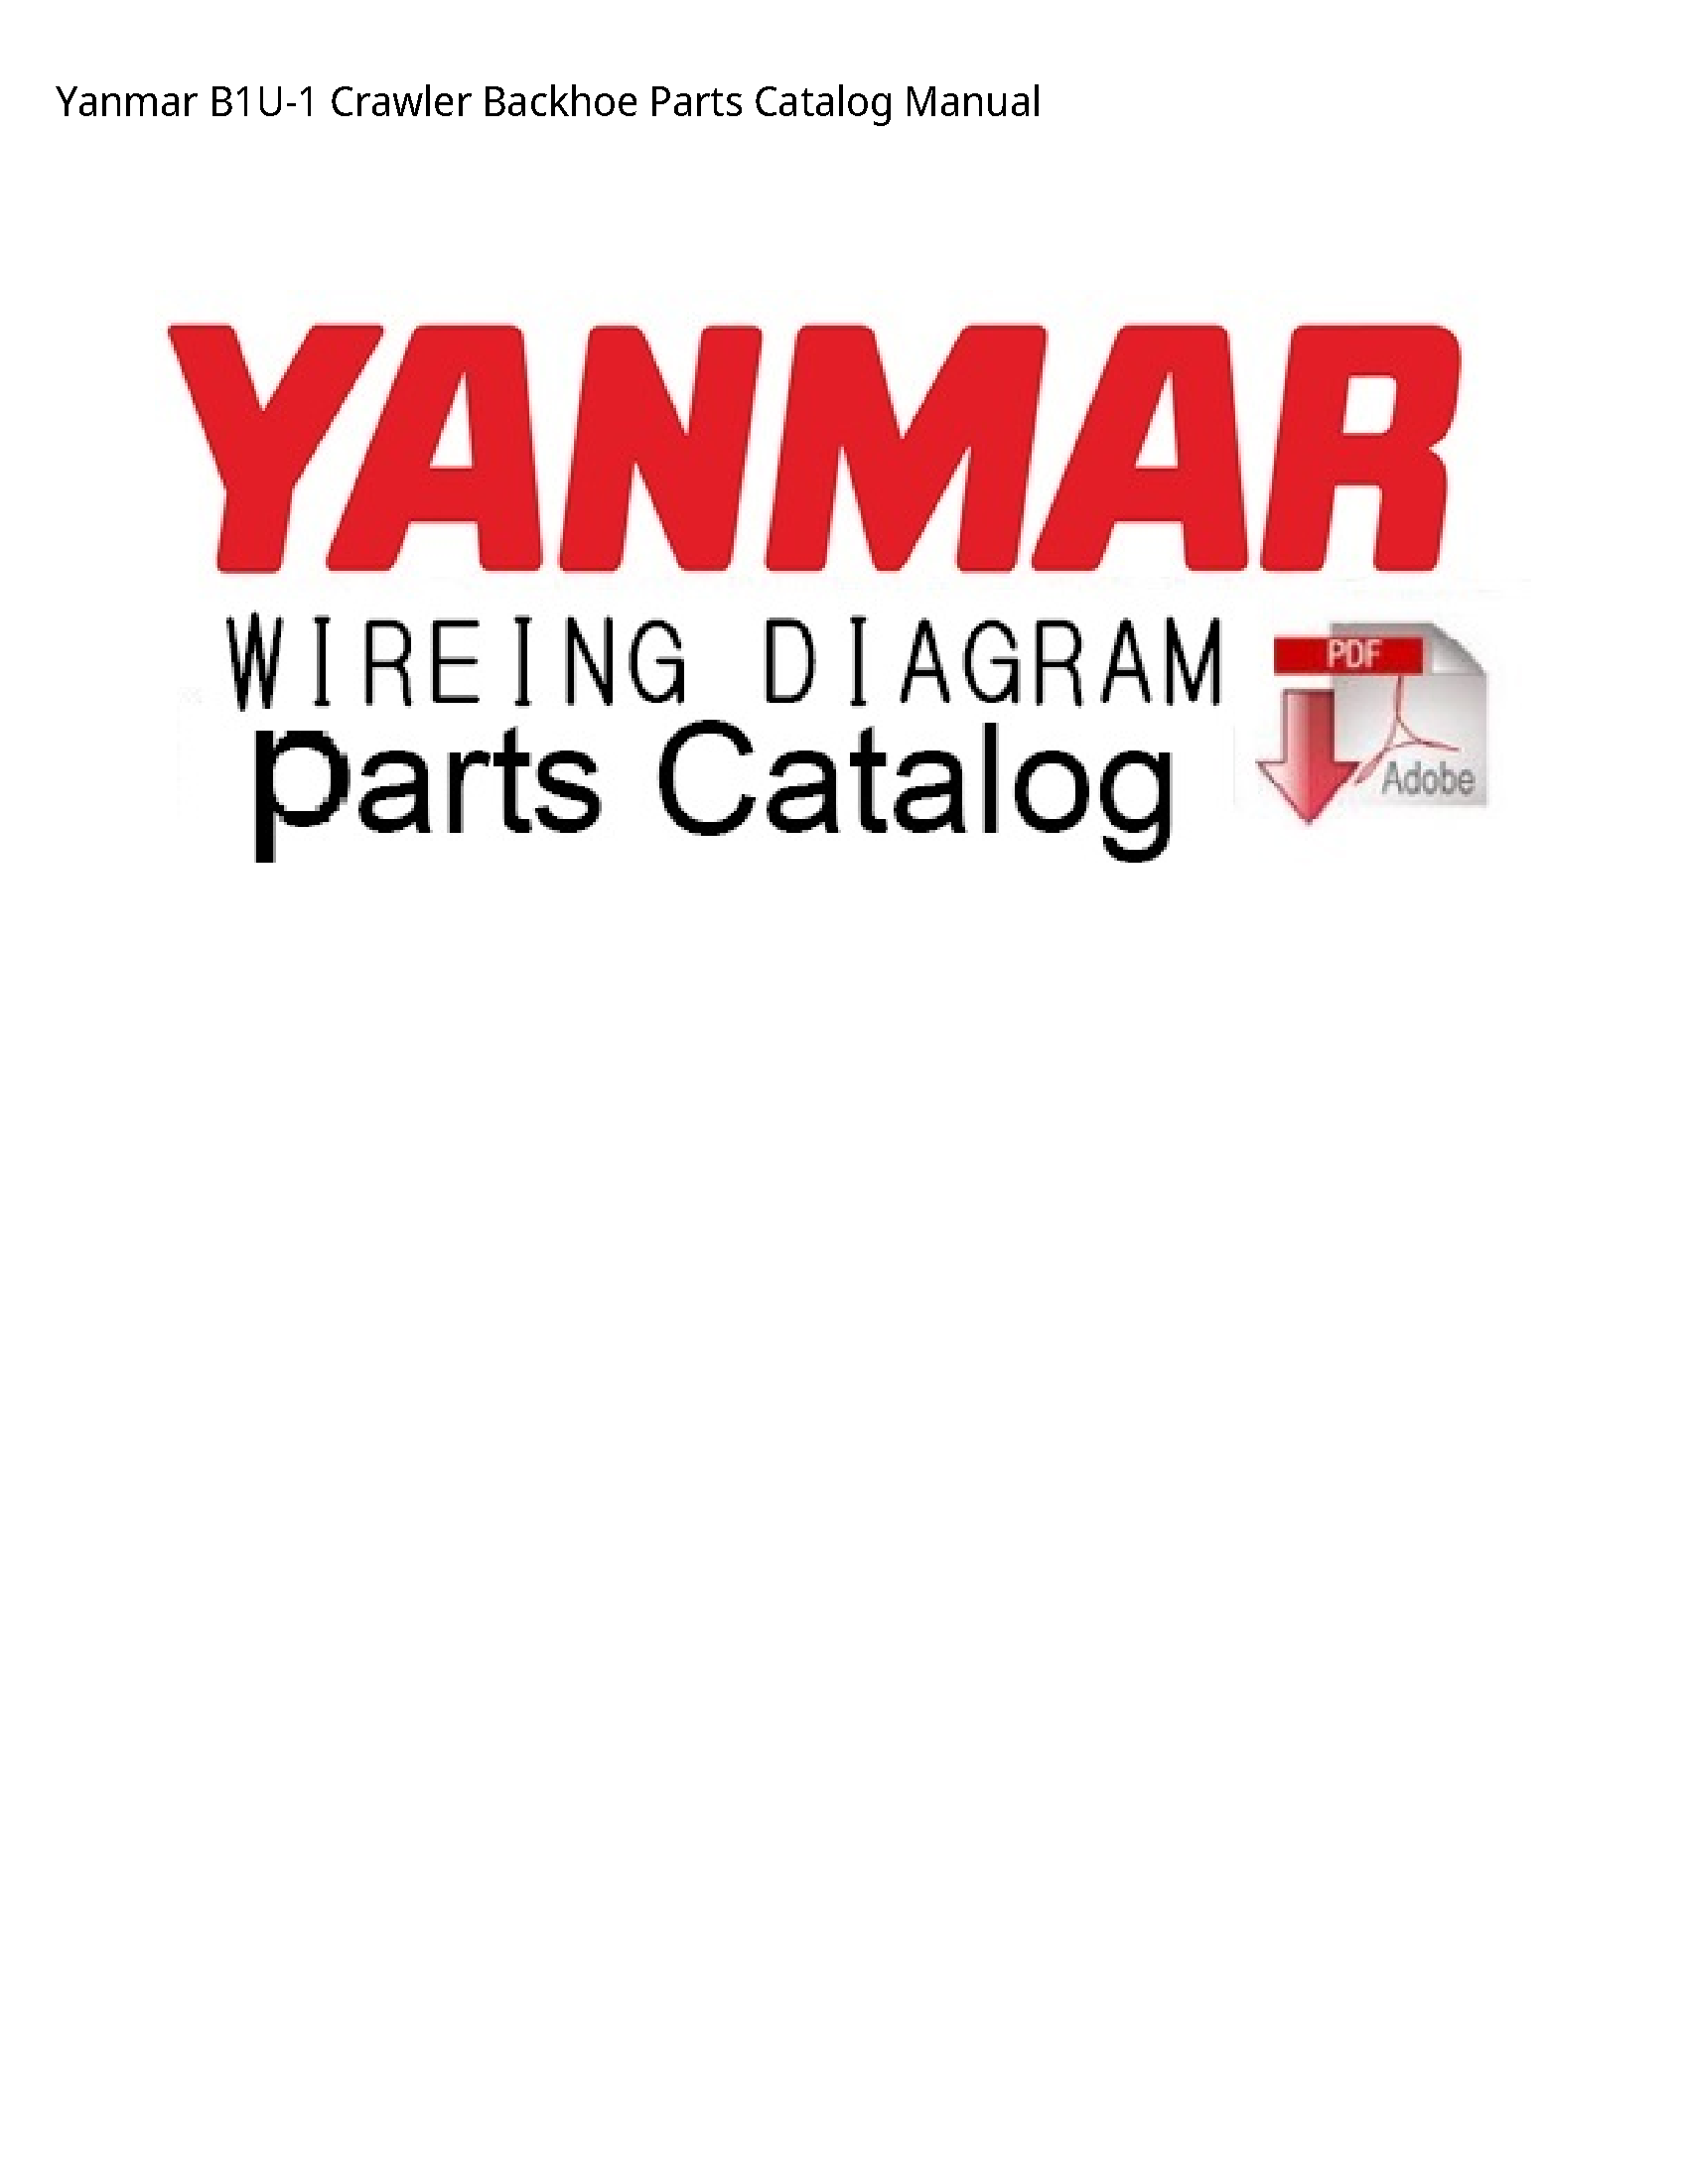 Yanmar B1U-1 Crawler Backhoe Parts Catalog manual